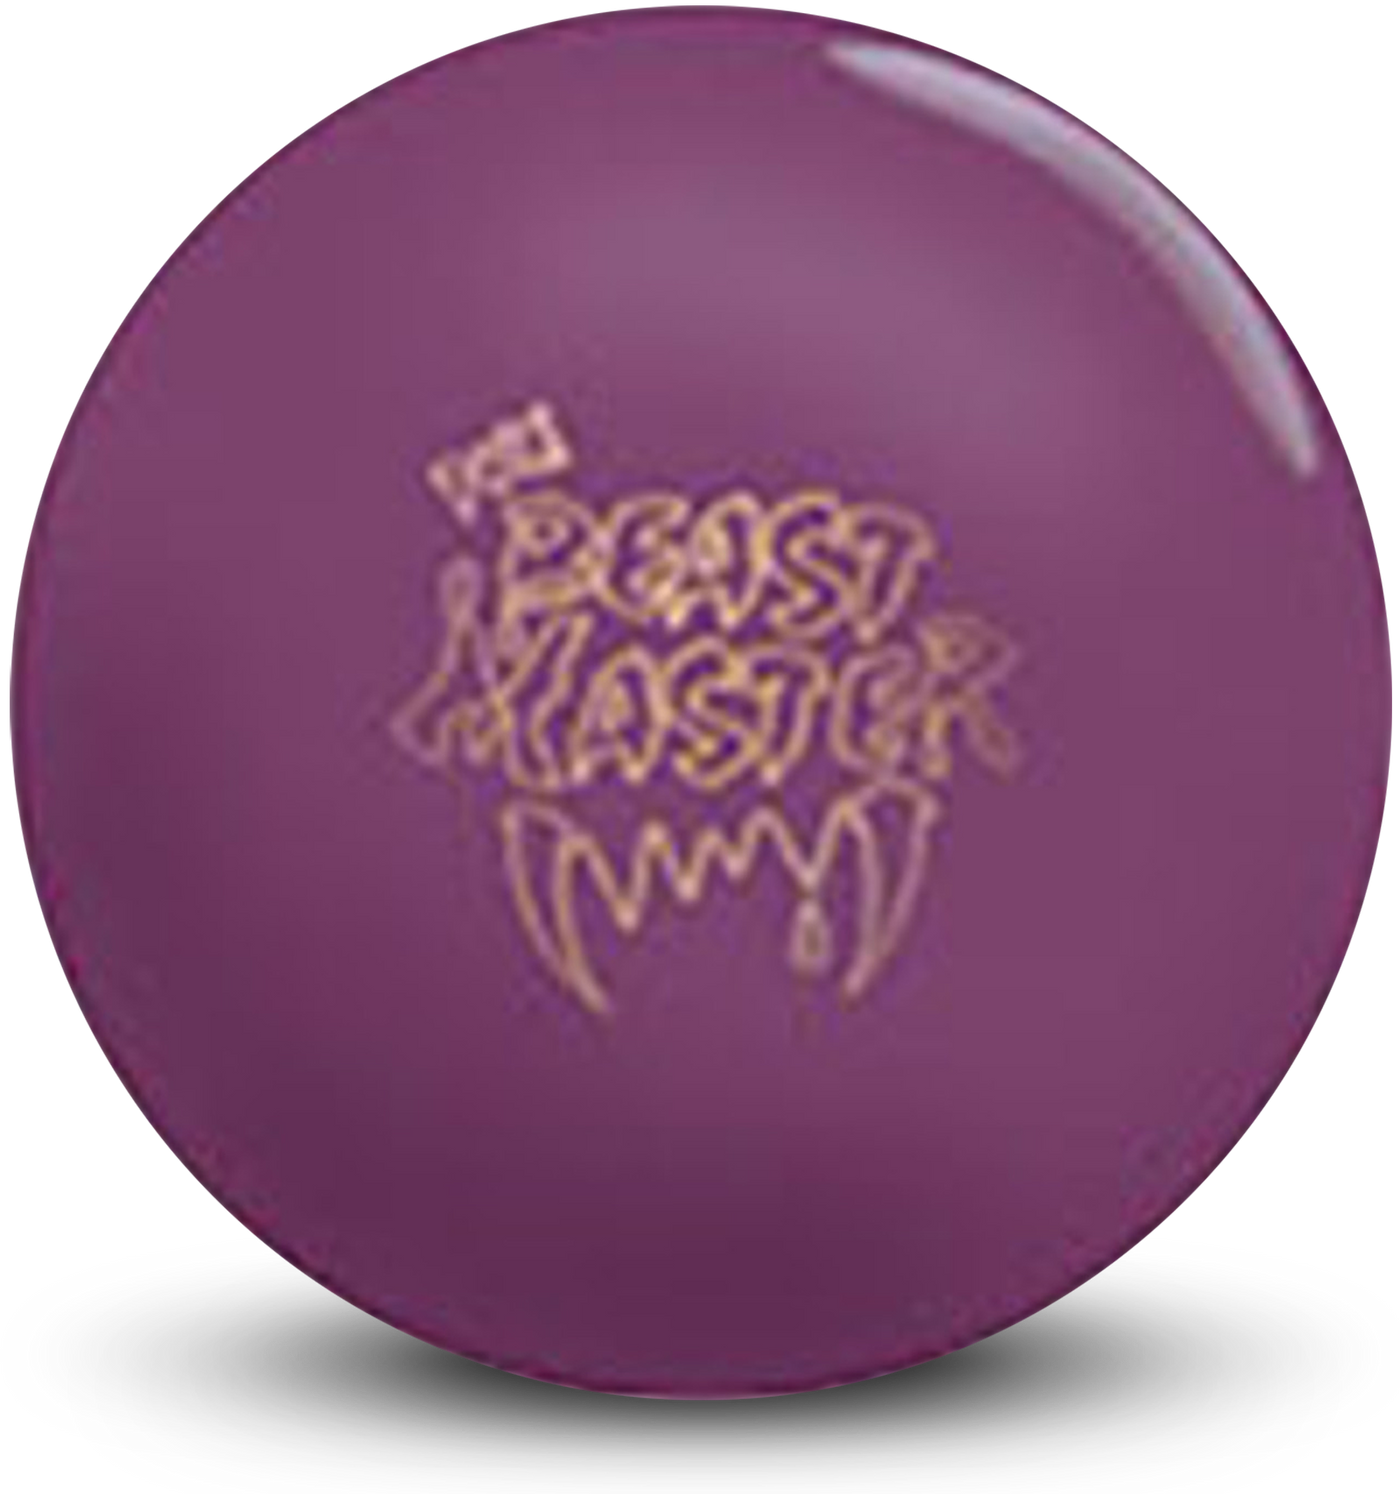 Beast Master Bowling Ball